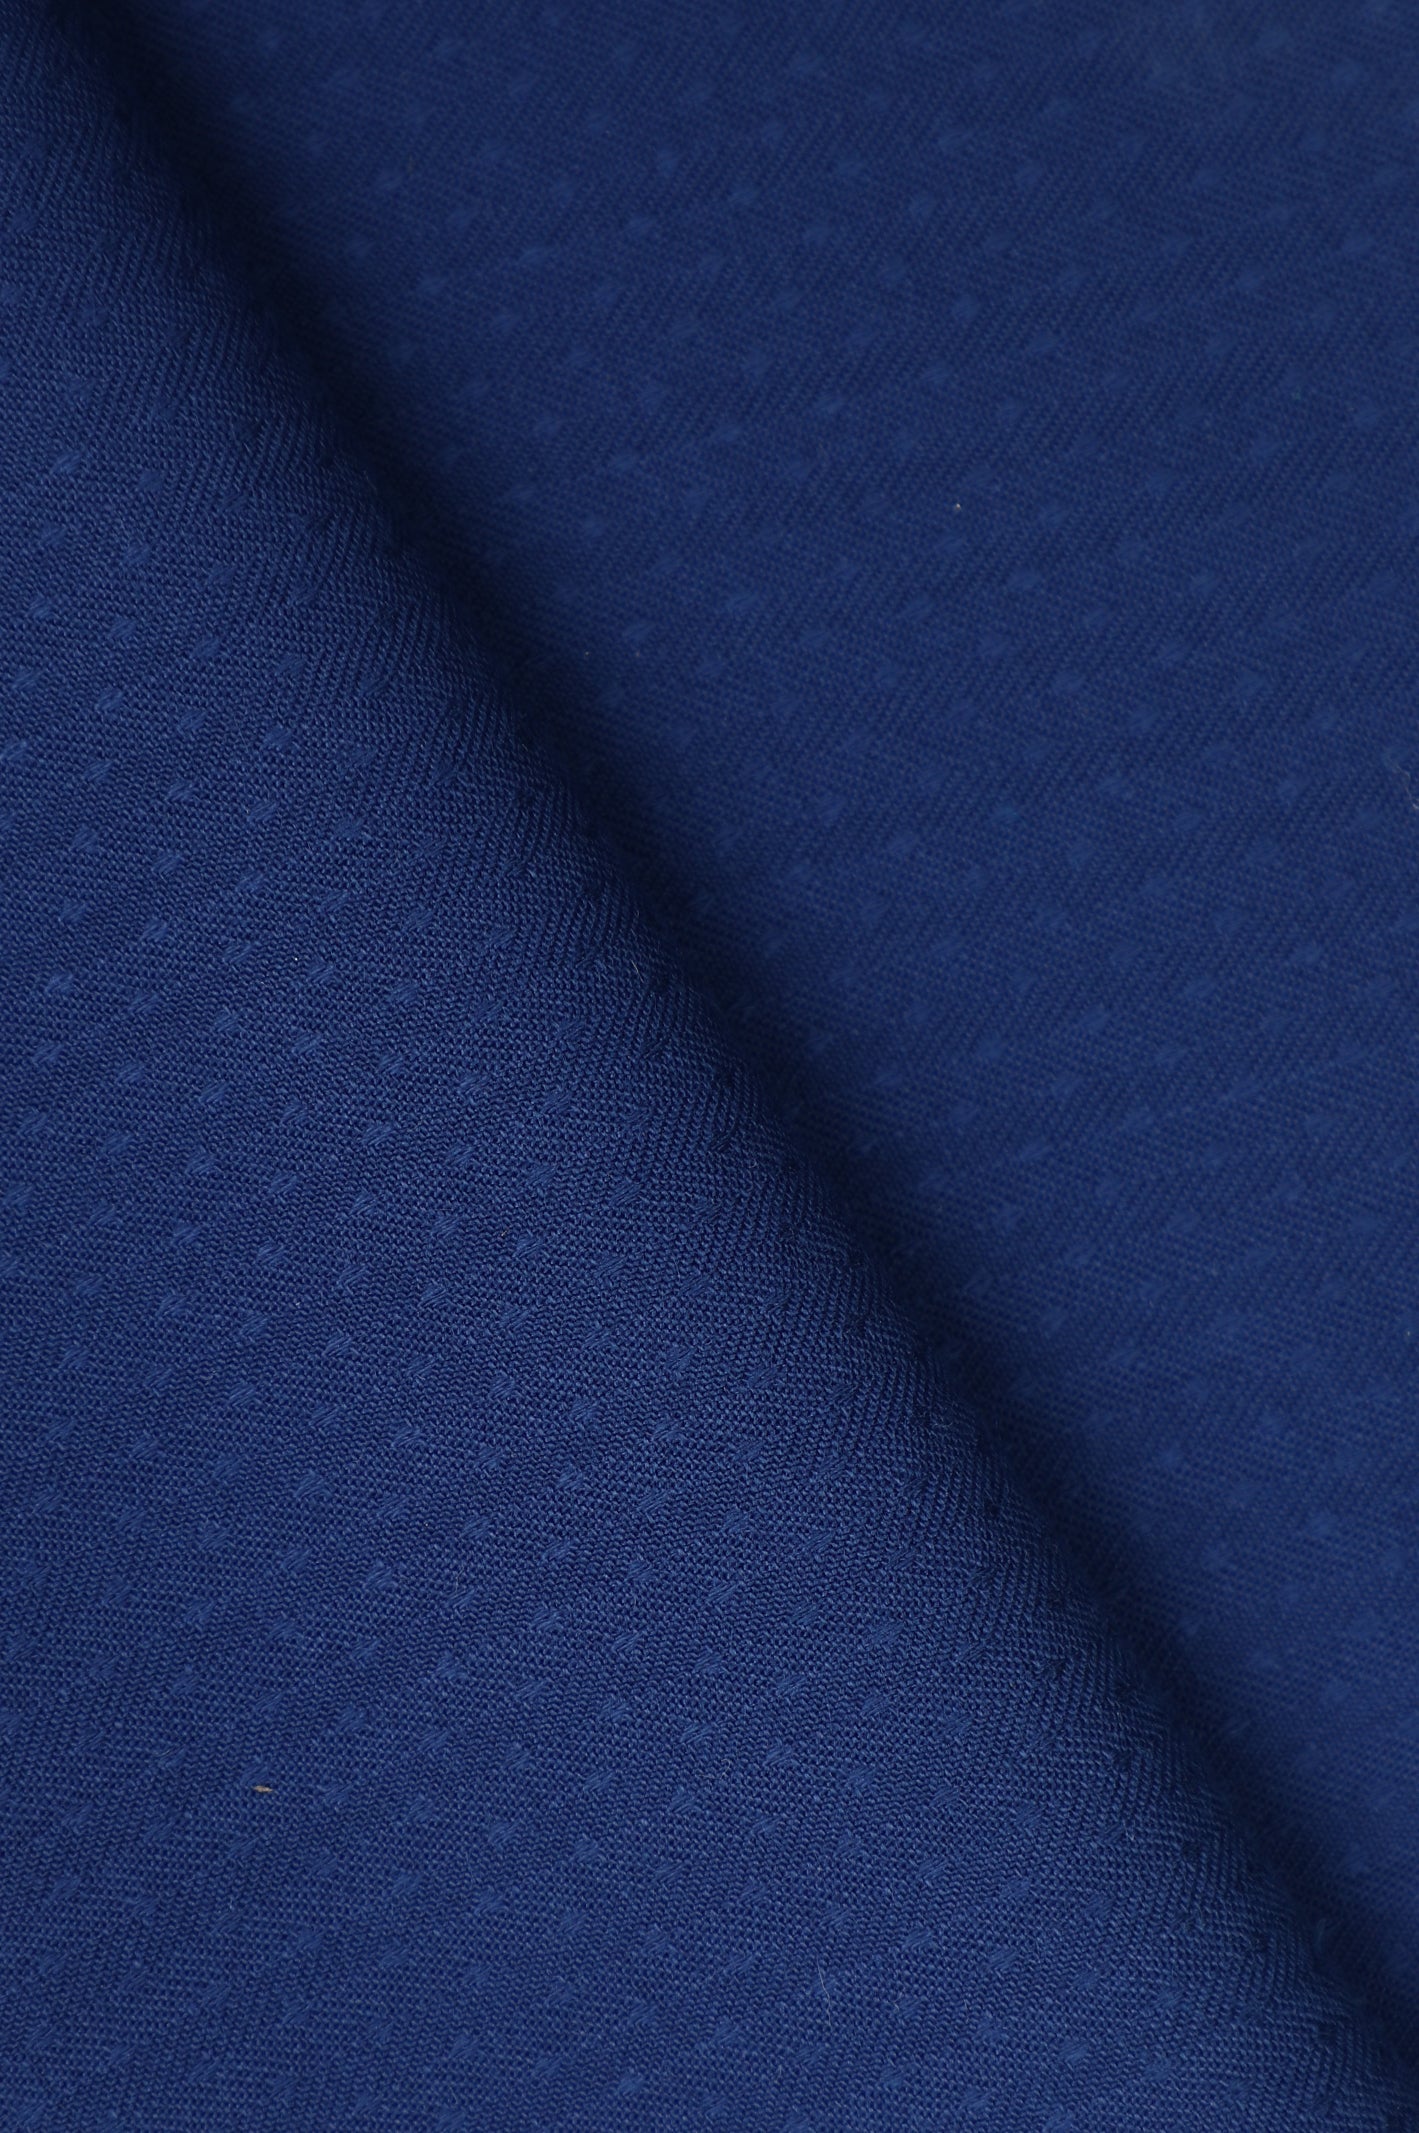 Wash & Wear Unstitched Fabric for Men SKU: US0195-N-BLUE - Diners